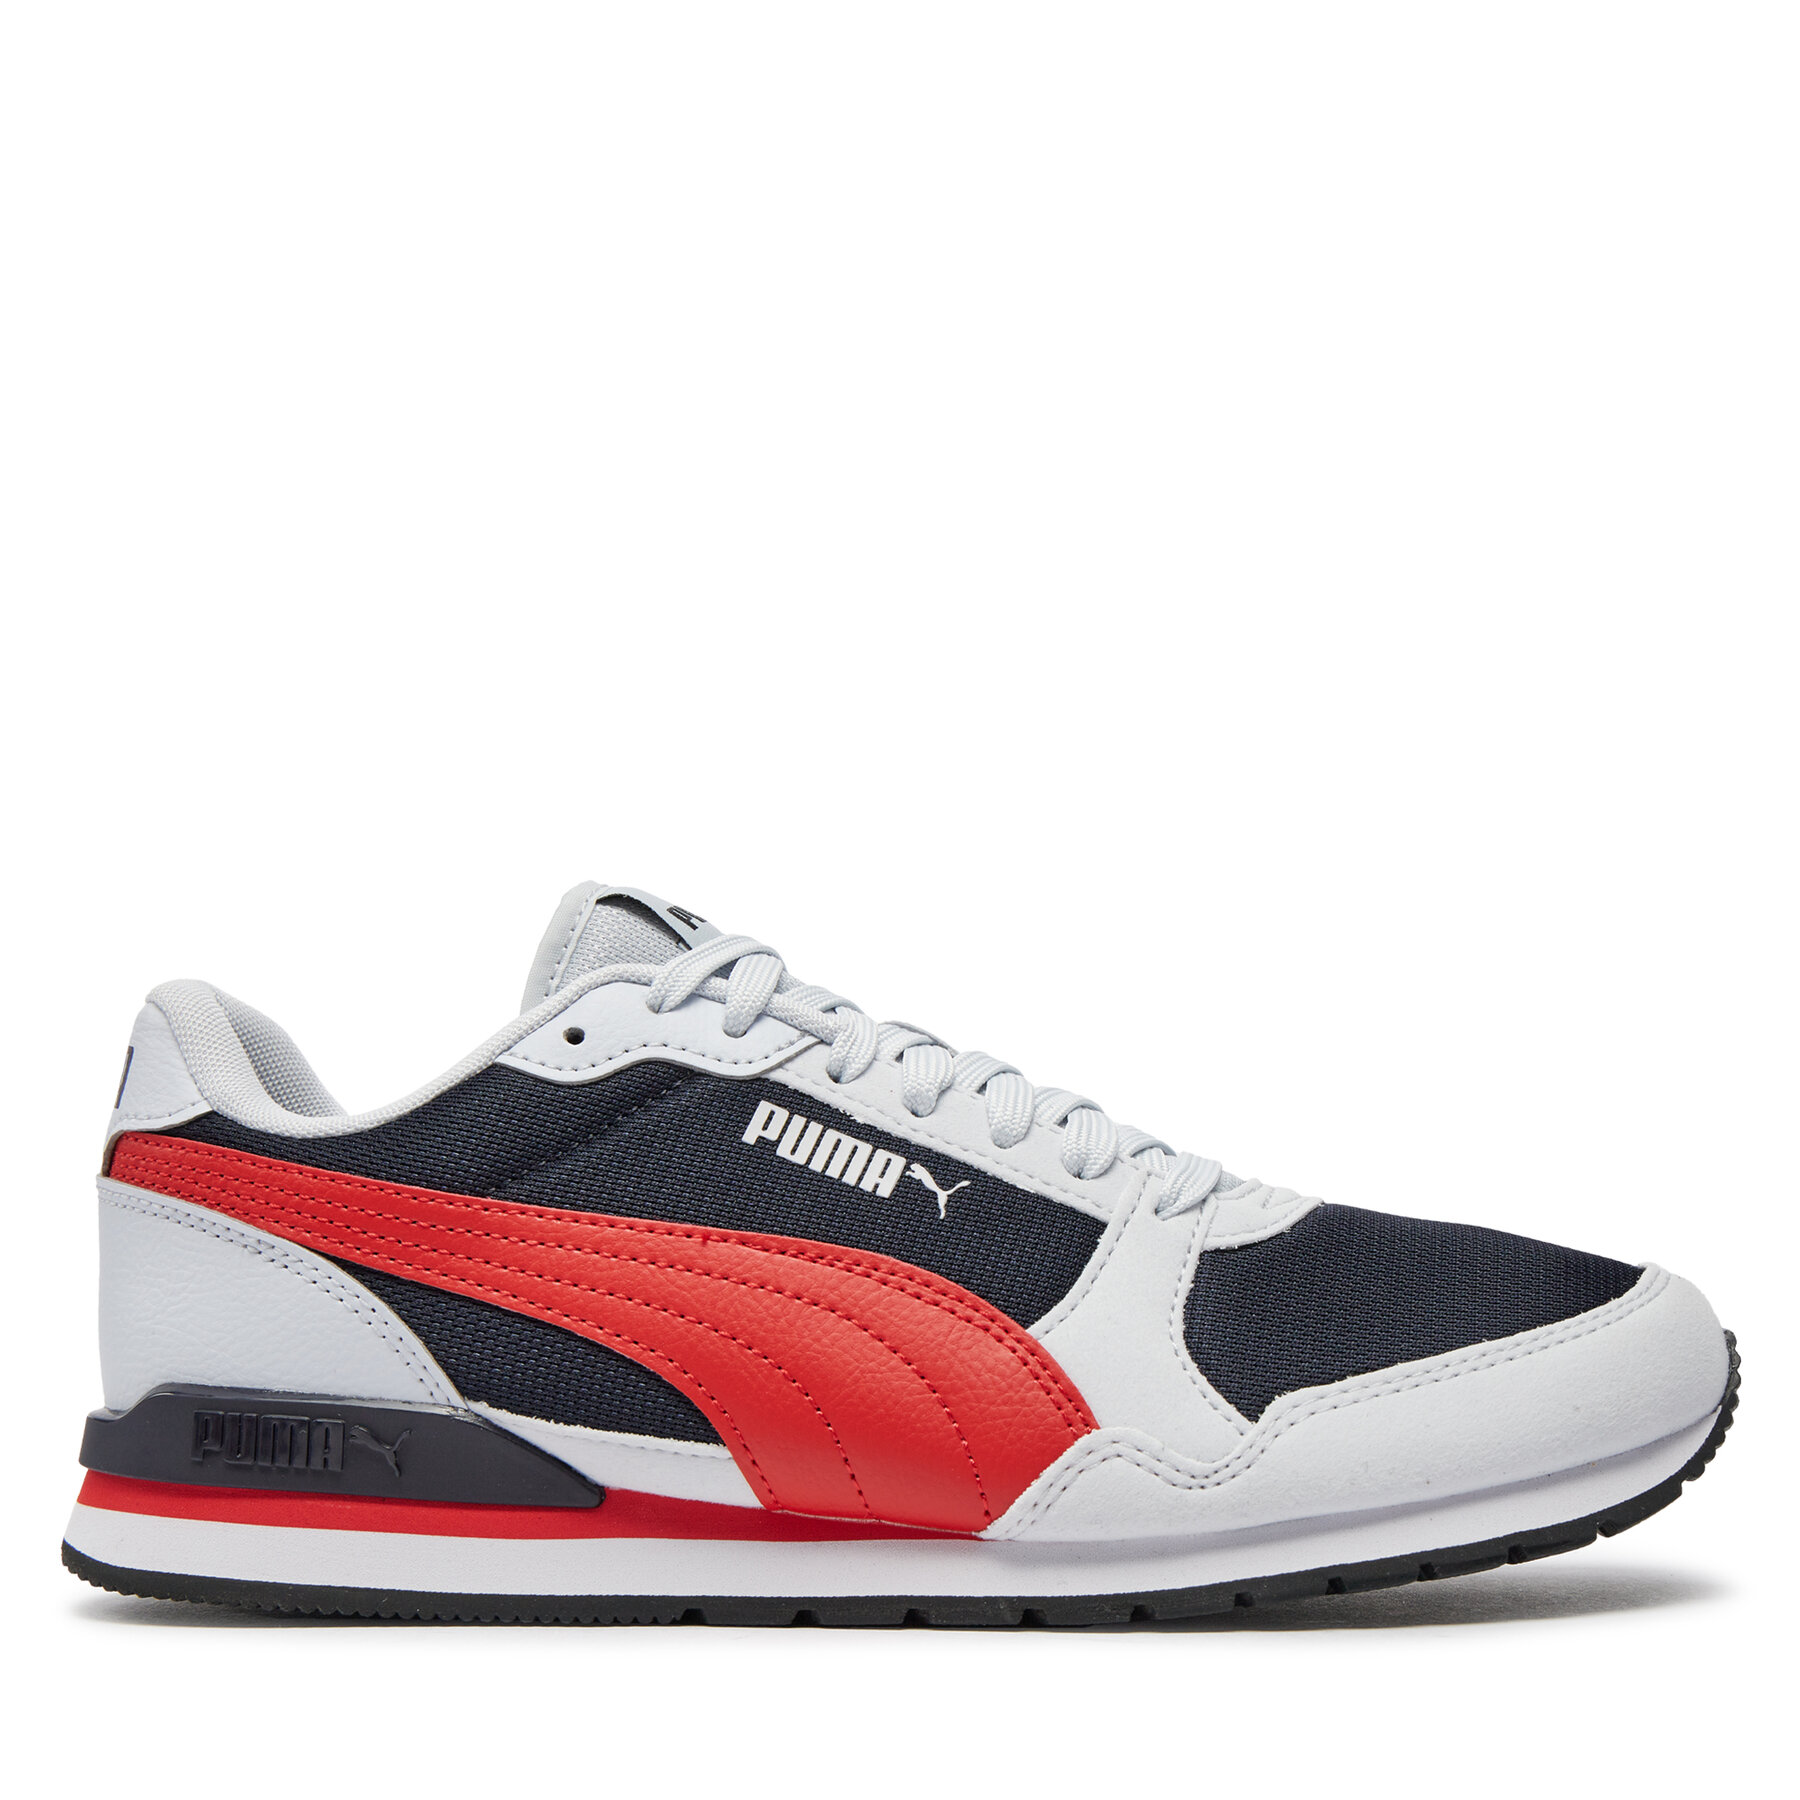 Sneakers Puma St Runner V3 384640-21 New Navy/For All Time Red/Silver Mist/Puma White/Puma Black von Puma